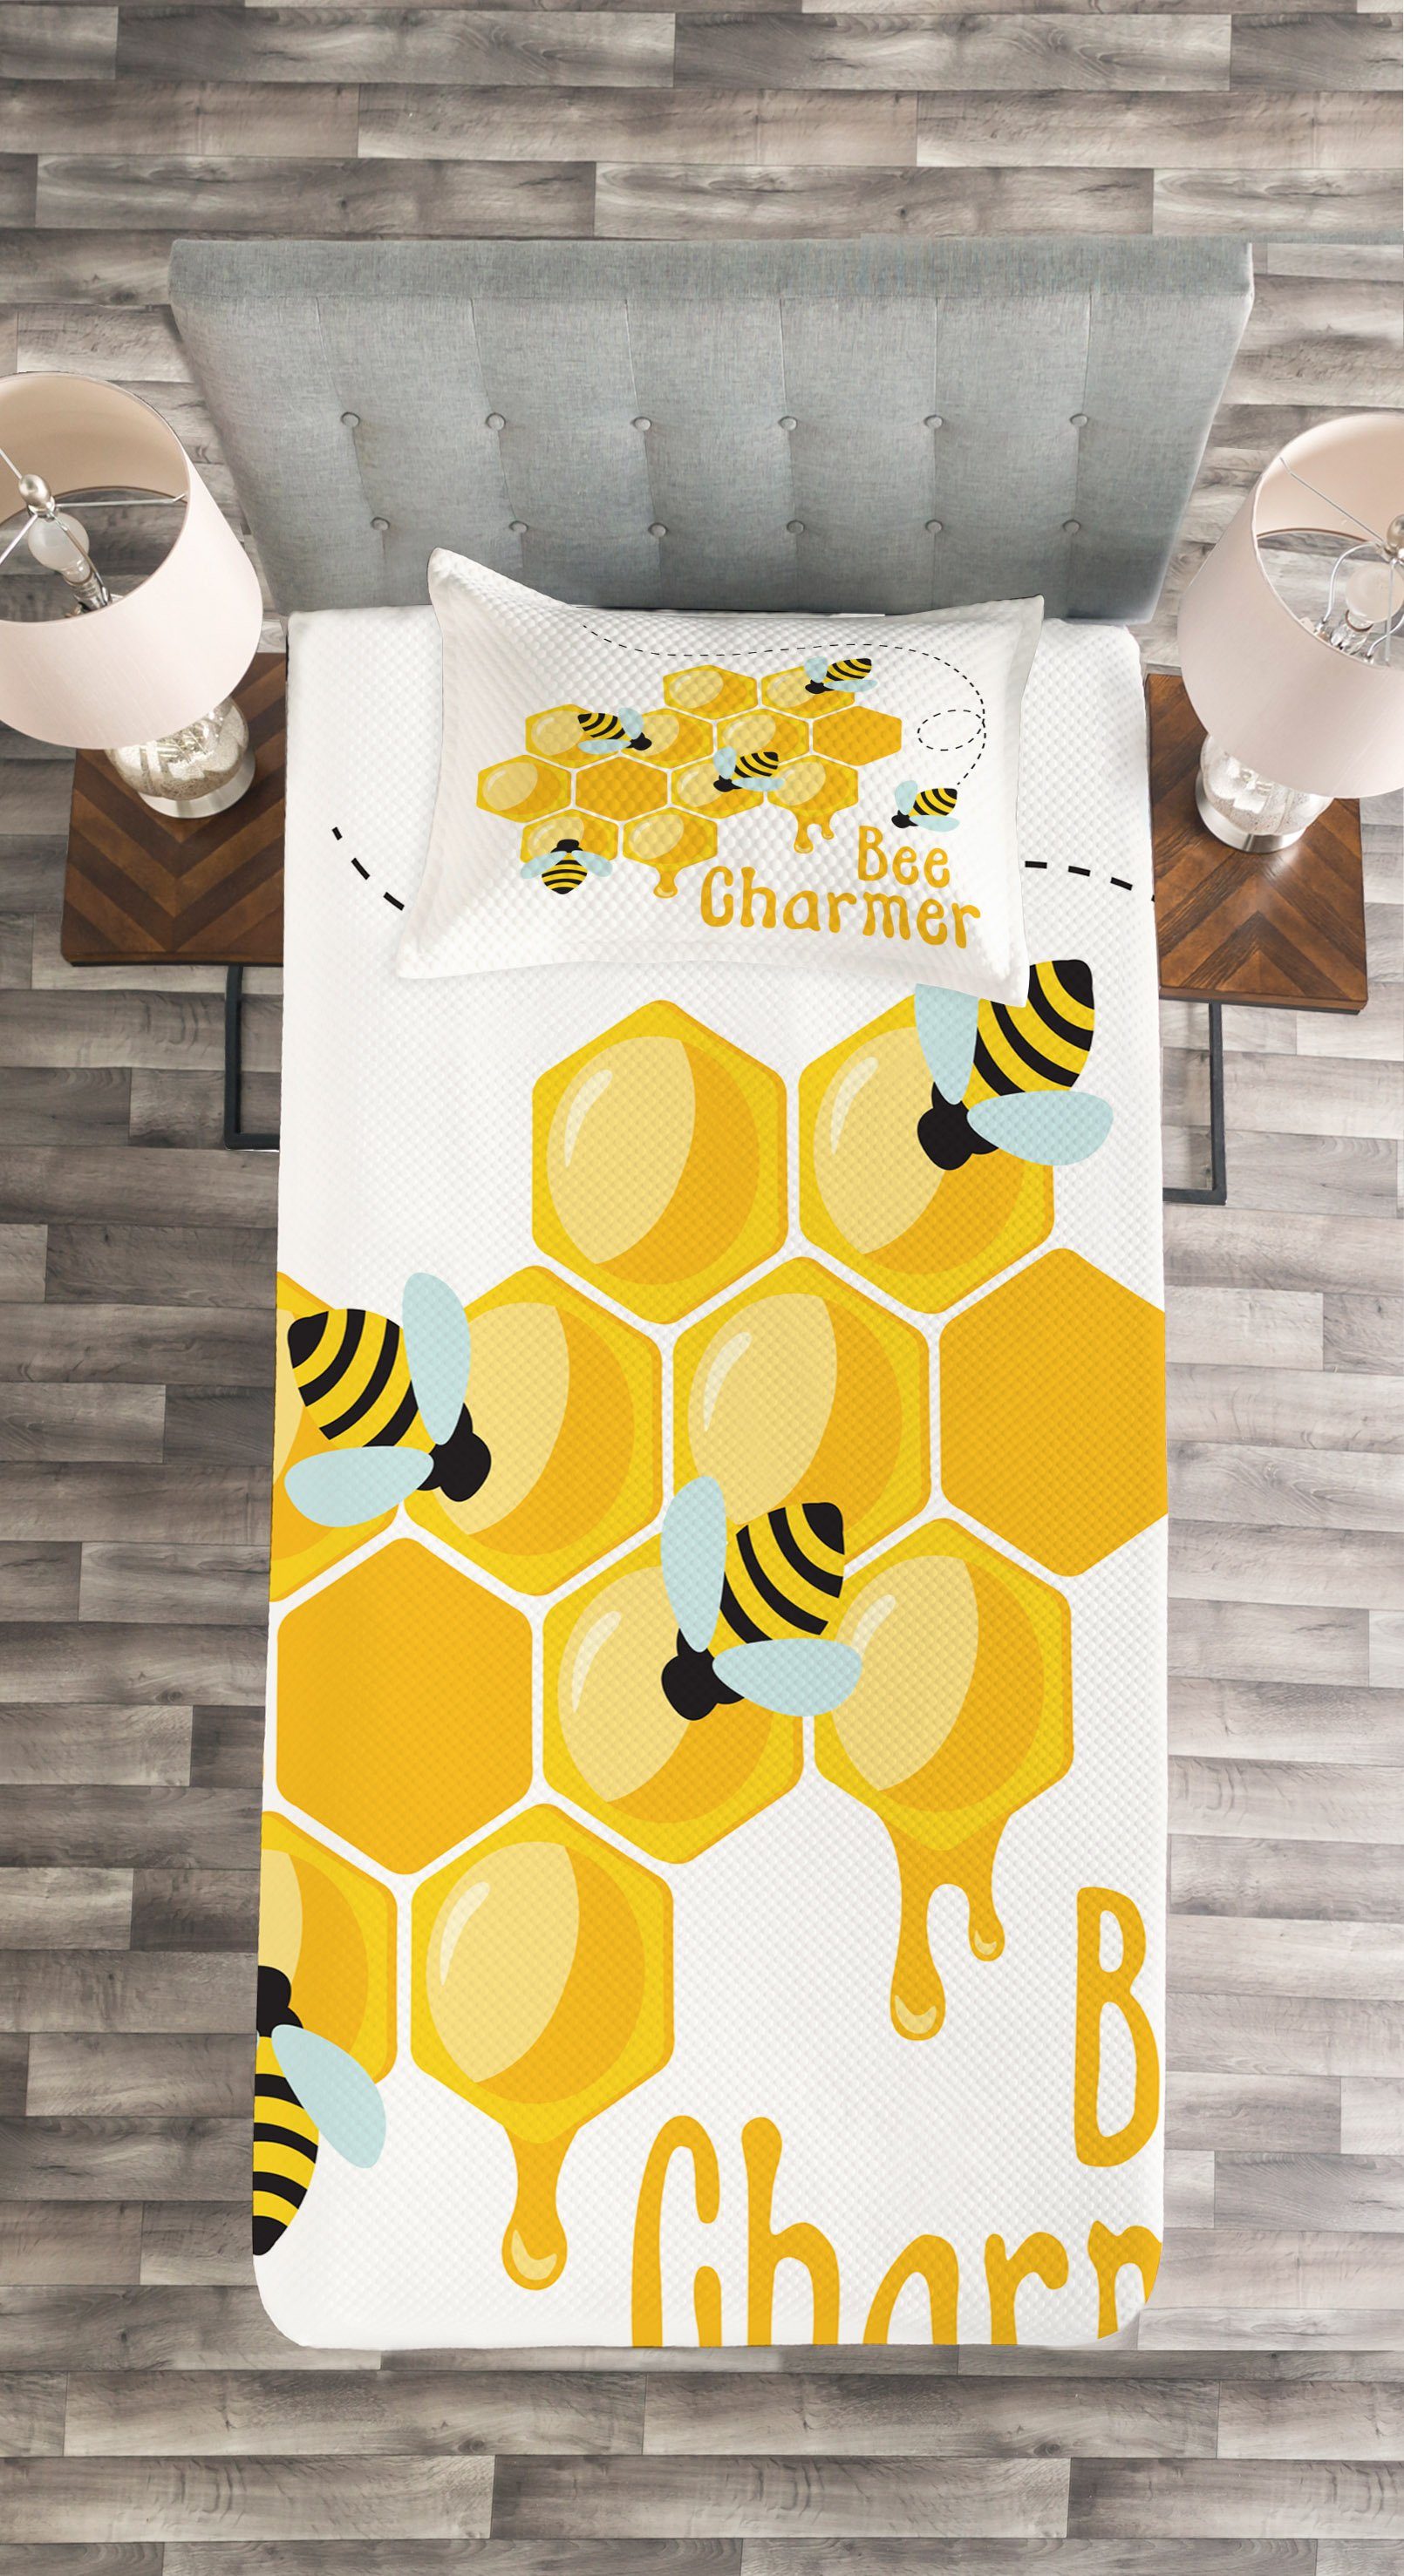 Tagesdecke mit Bee Biene Set Abakuhaus, Charmeur Beschriftung Honey Waschbar, Kissenbezügen